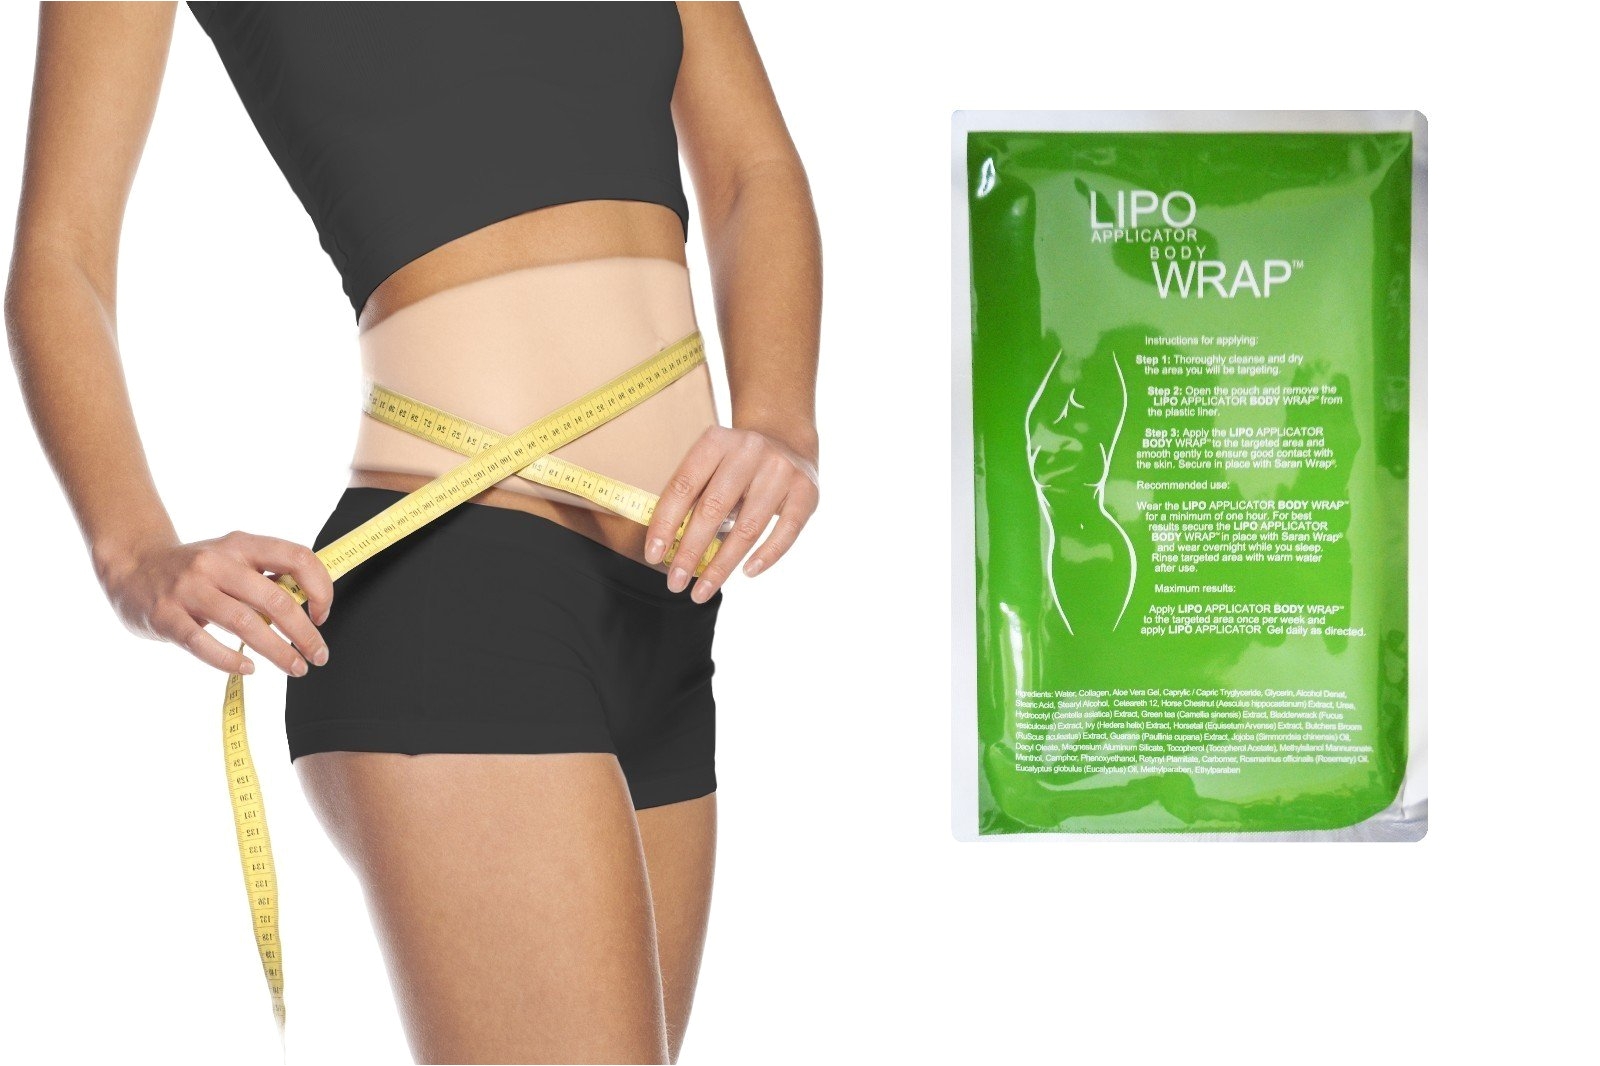 Lipo Light Treatment Amazon Com Ultimate Body Wrap Lipo Applicator Wrap 5 Wraps It